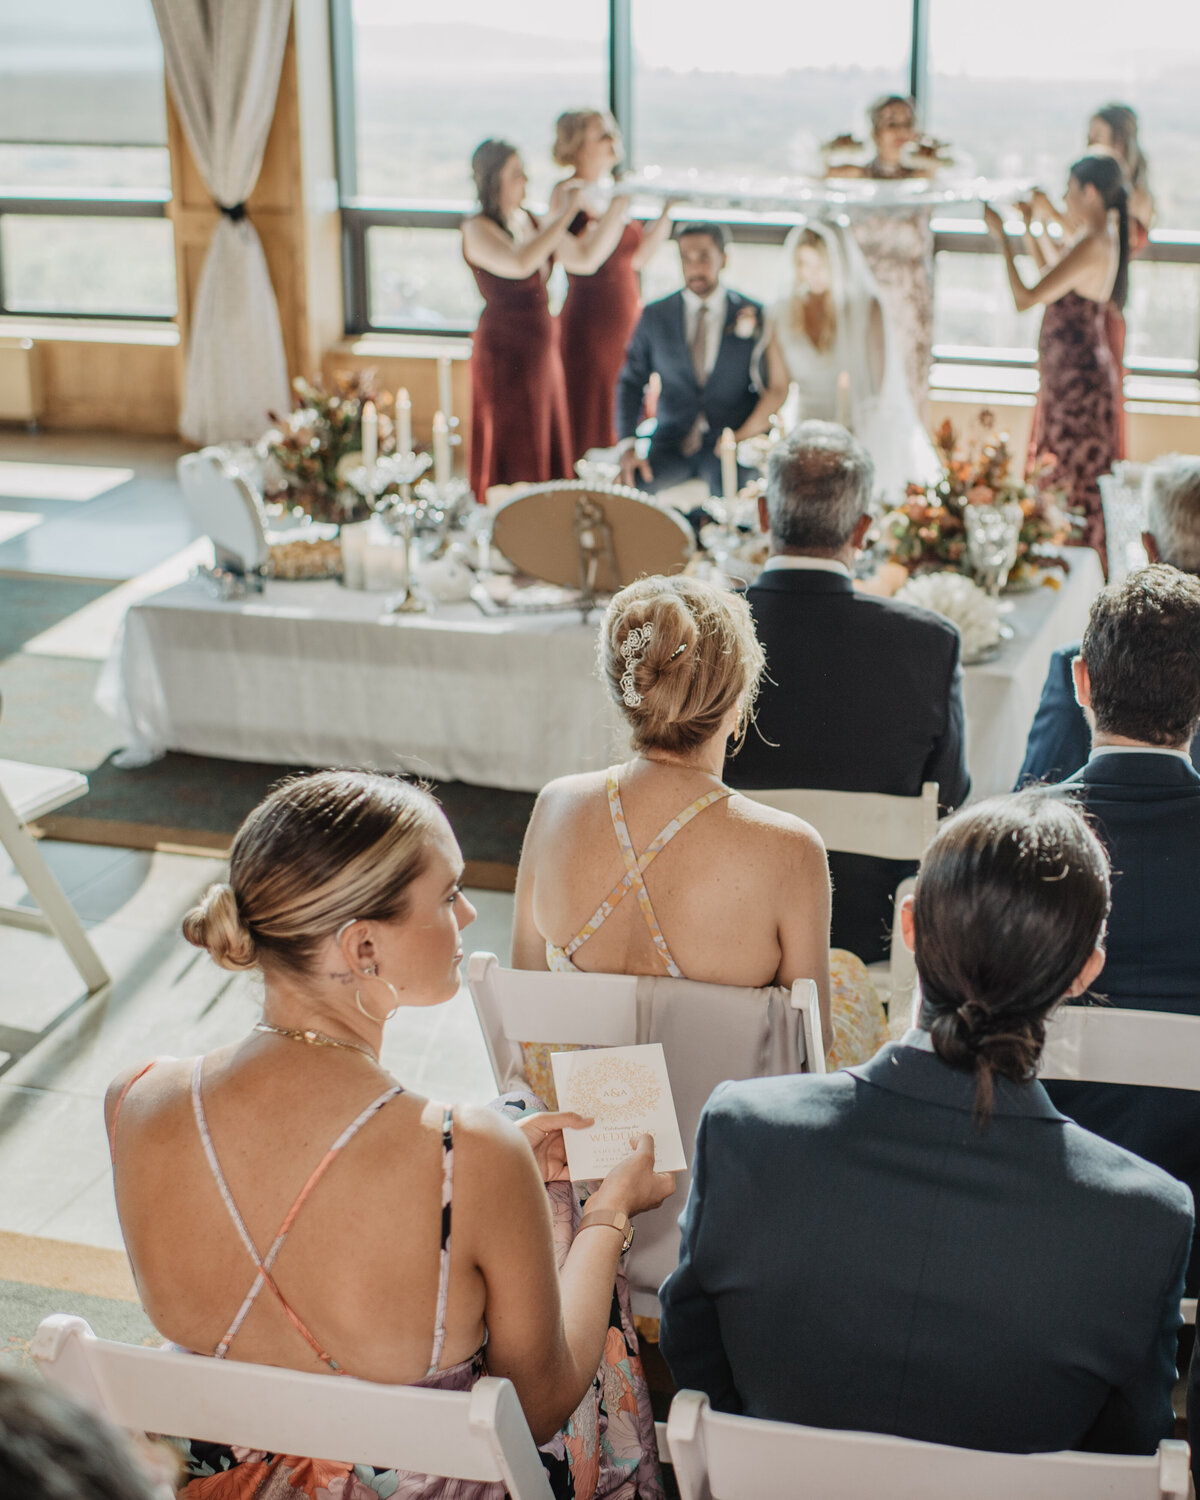 Photographers Jackson Hole capture guests at wedding reception